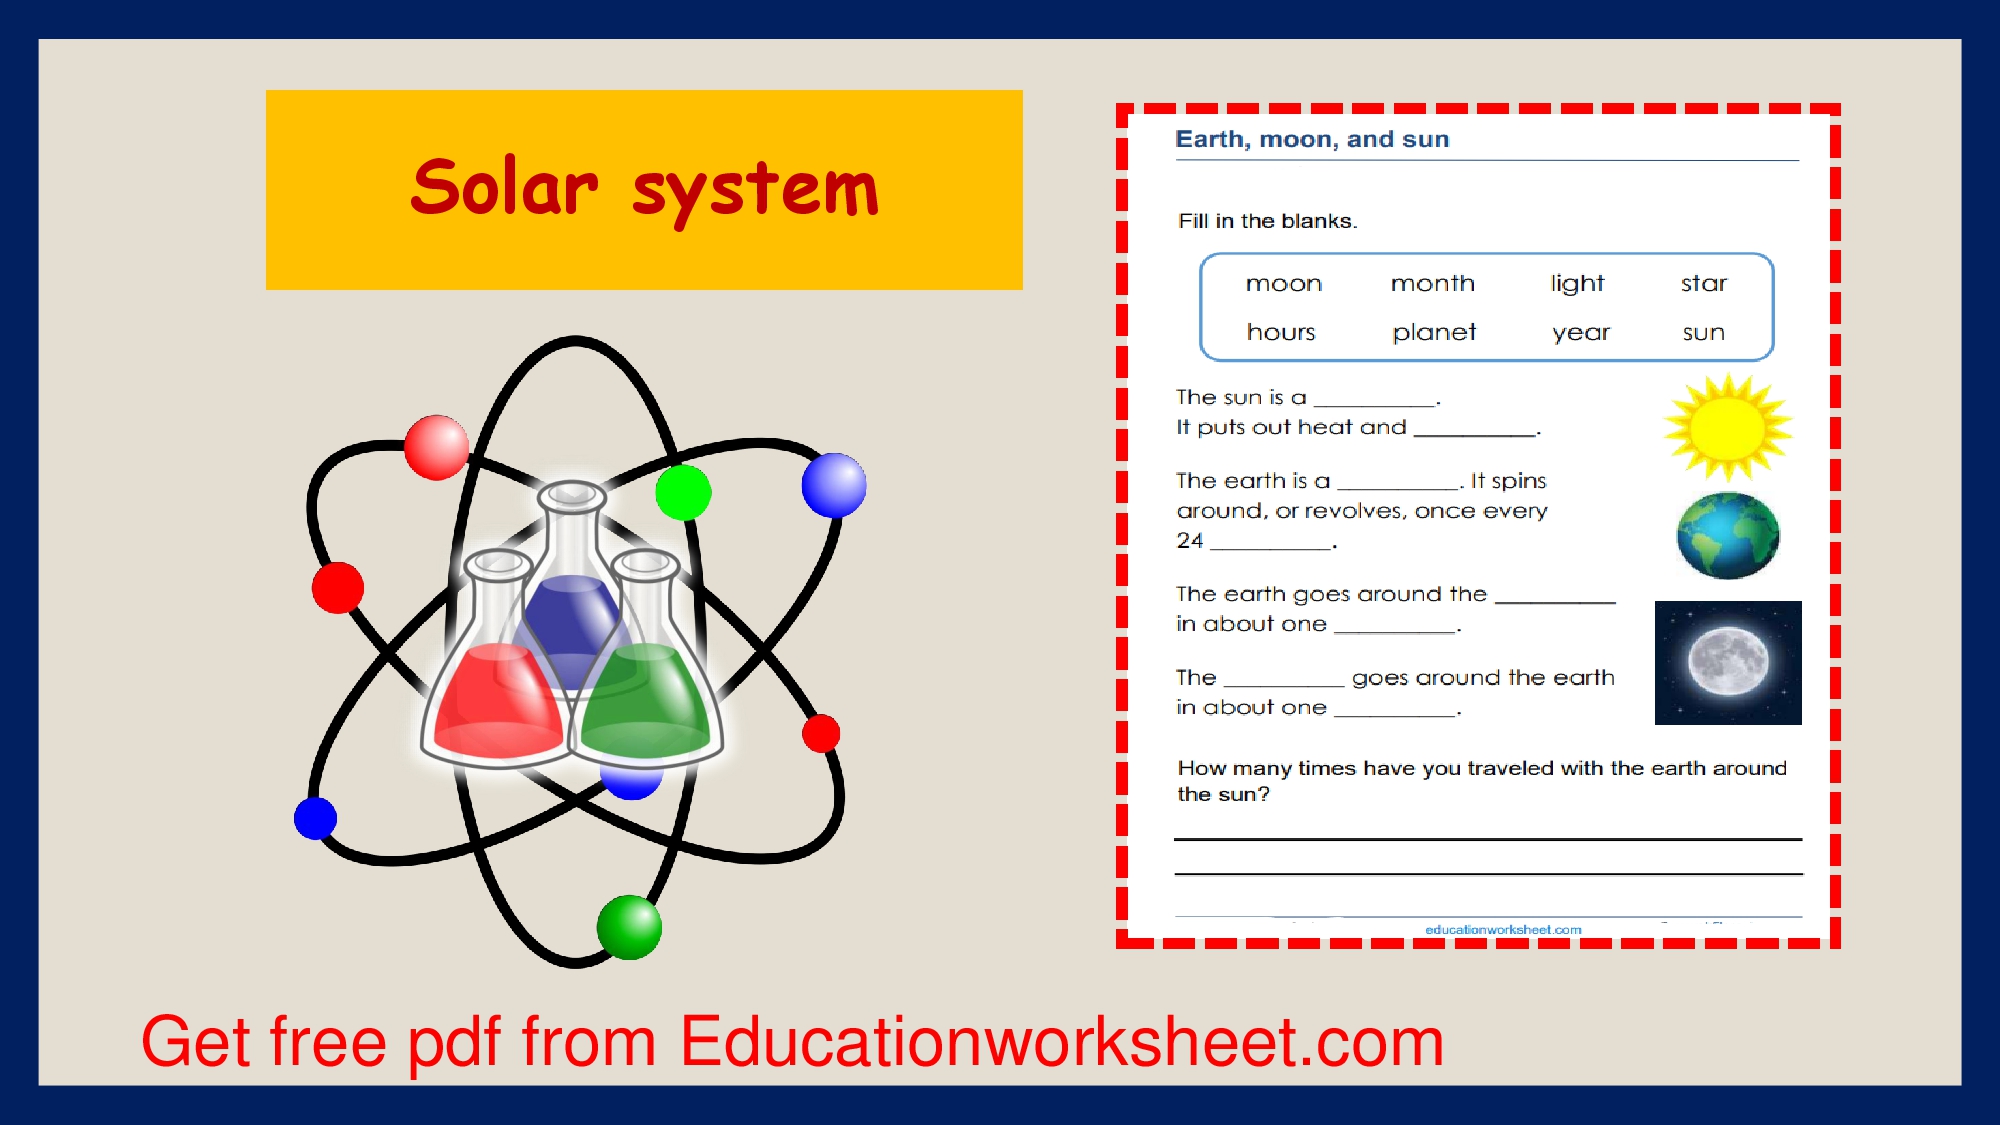 Solar system facts for kids worksheets